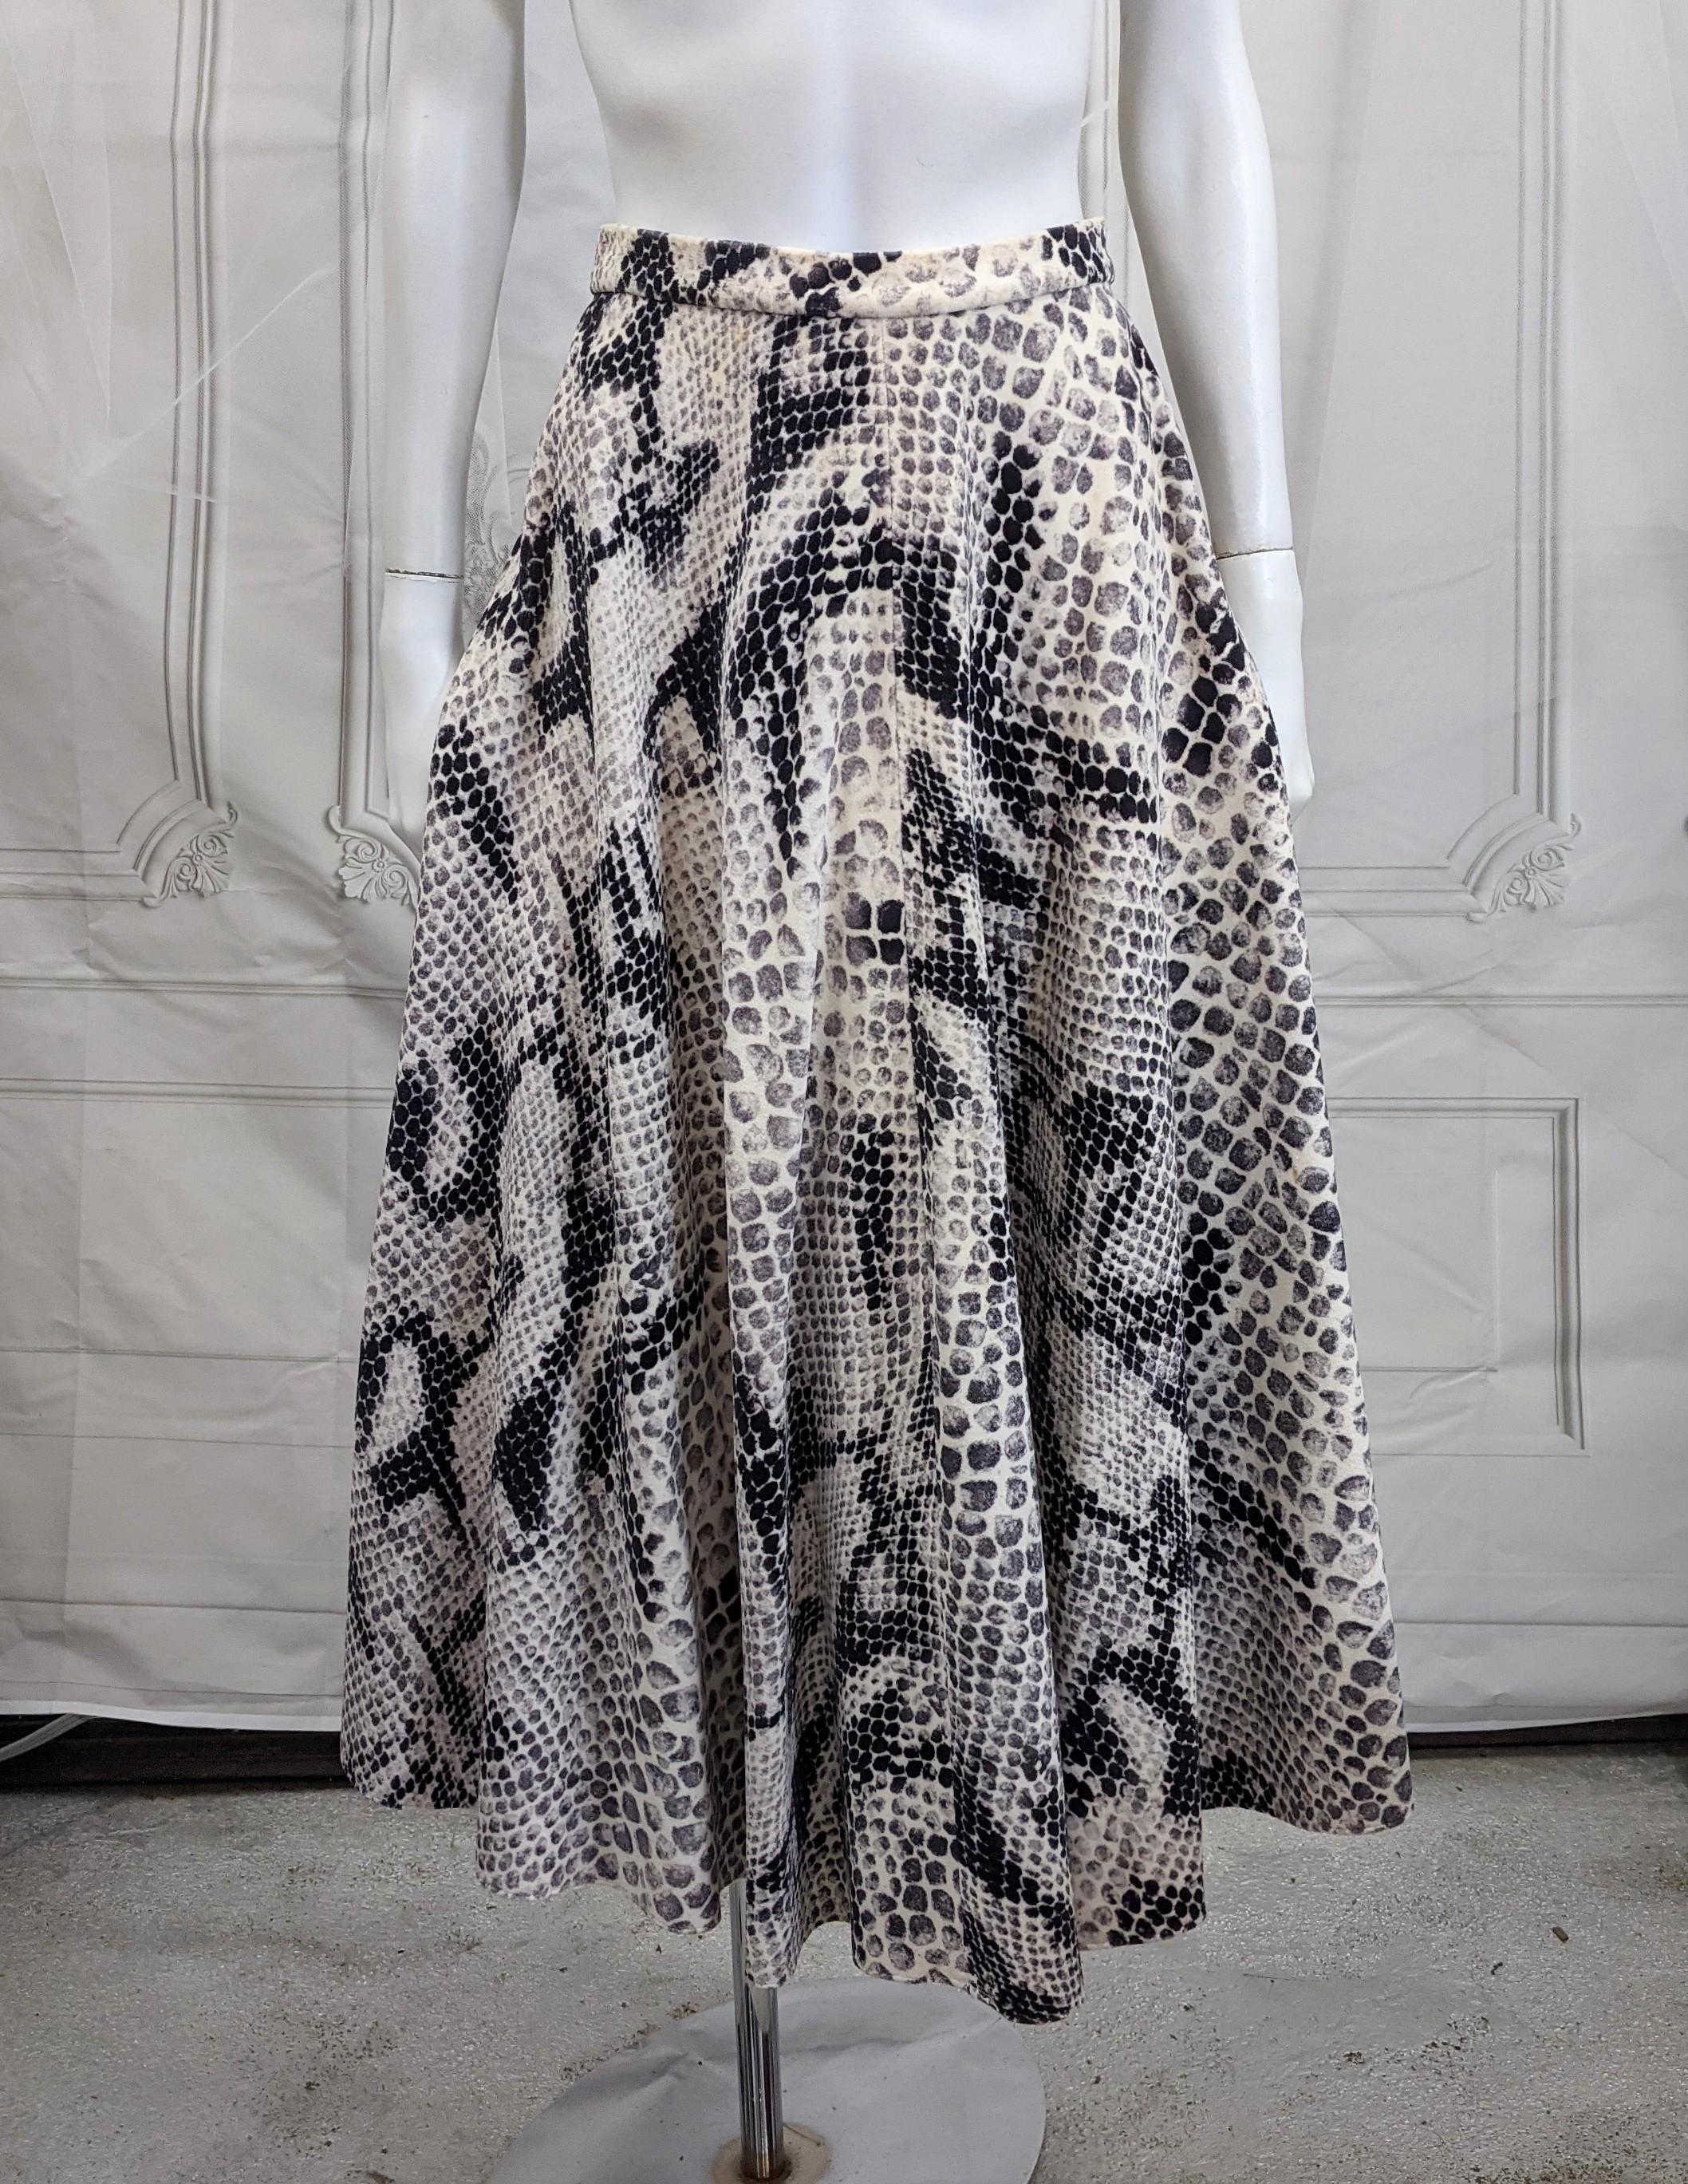 Unusual 1950s circle skirt of grey and black toned snake skin printed ivory cotton velvet. Back zip entry.
Length 31